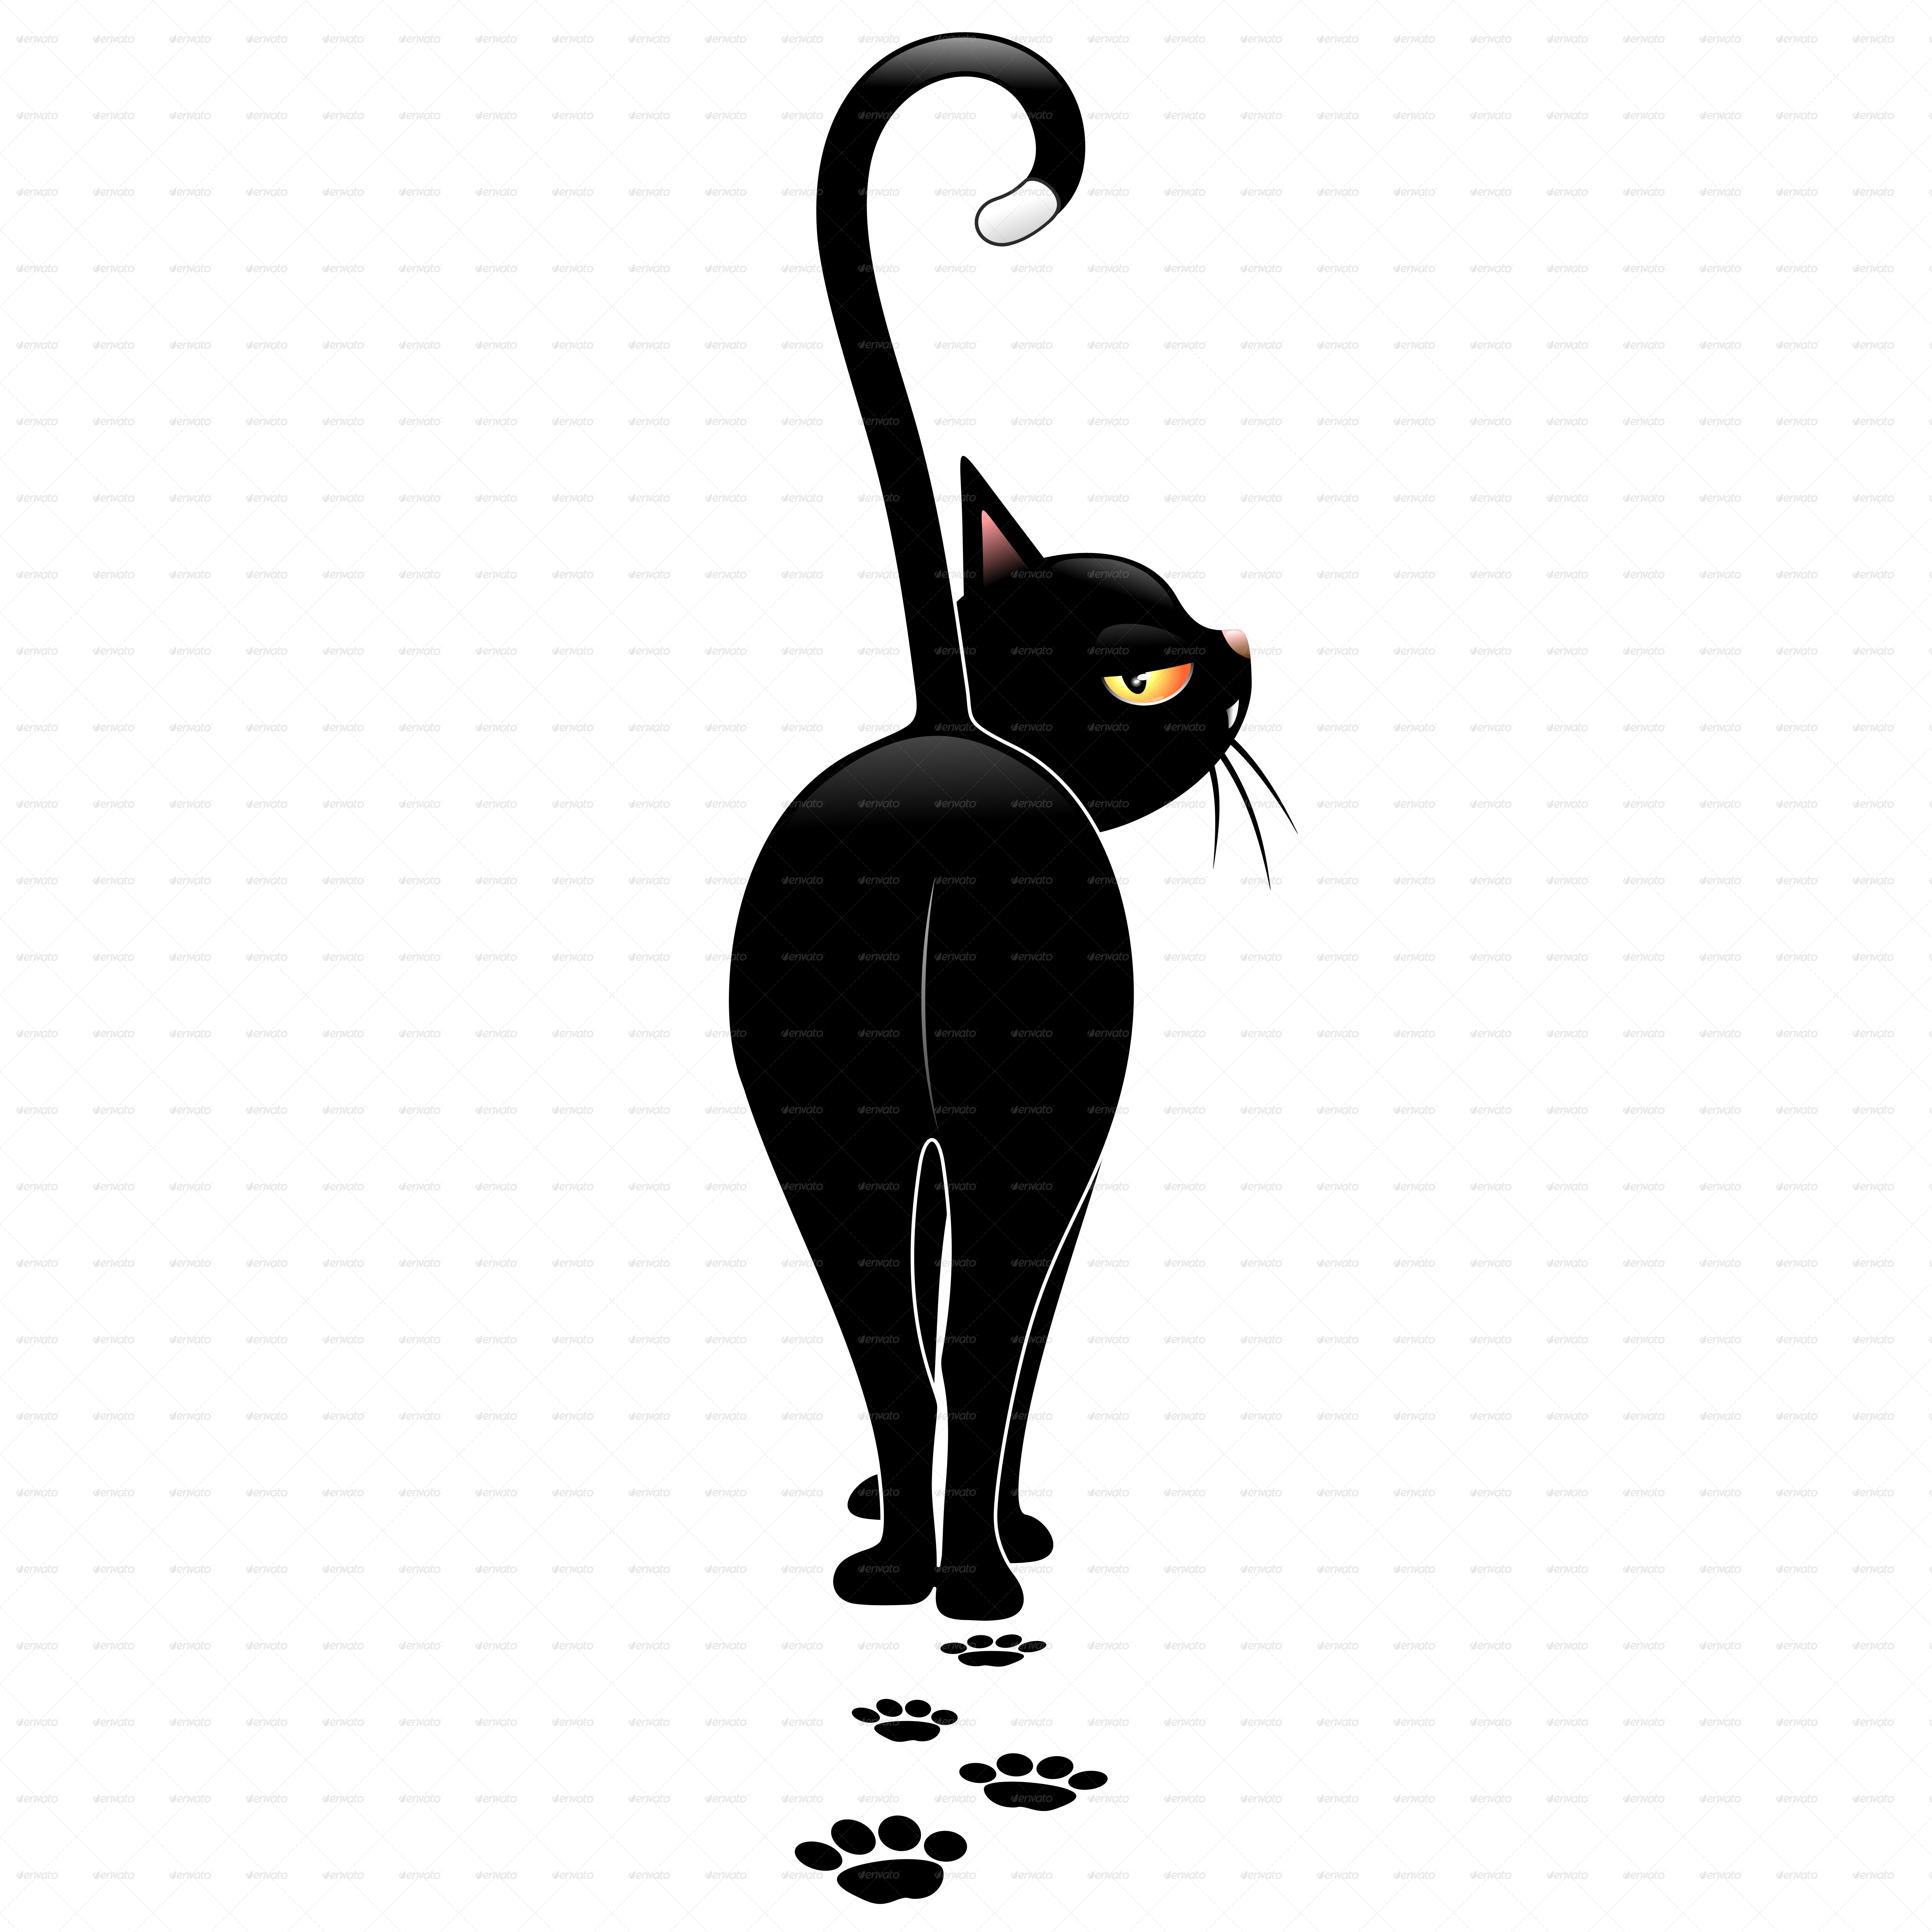 Disdainful Black Cat Cartoon Walking Away by Bluedarkat | GraphicRiver